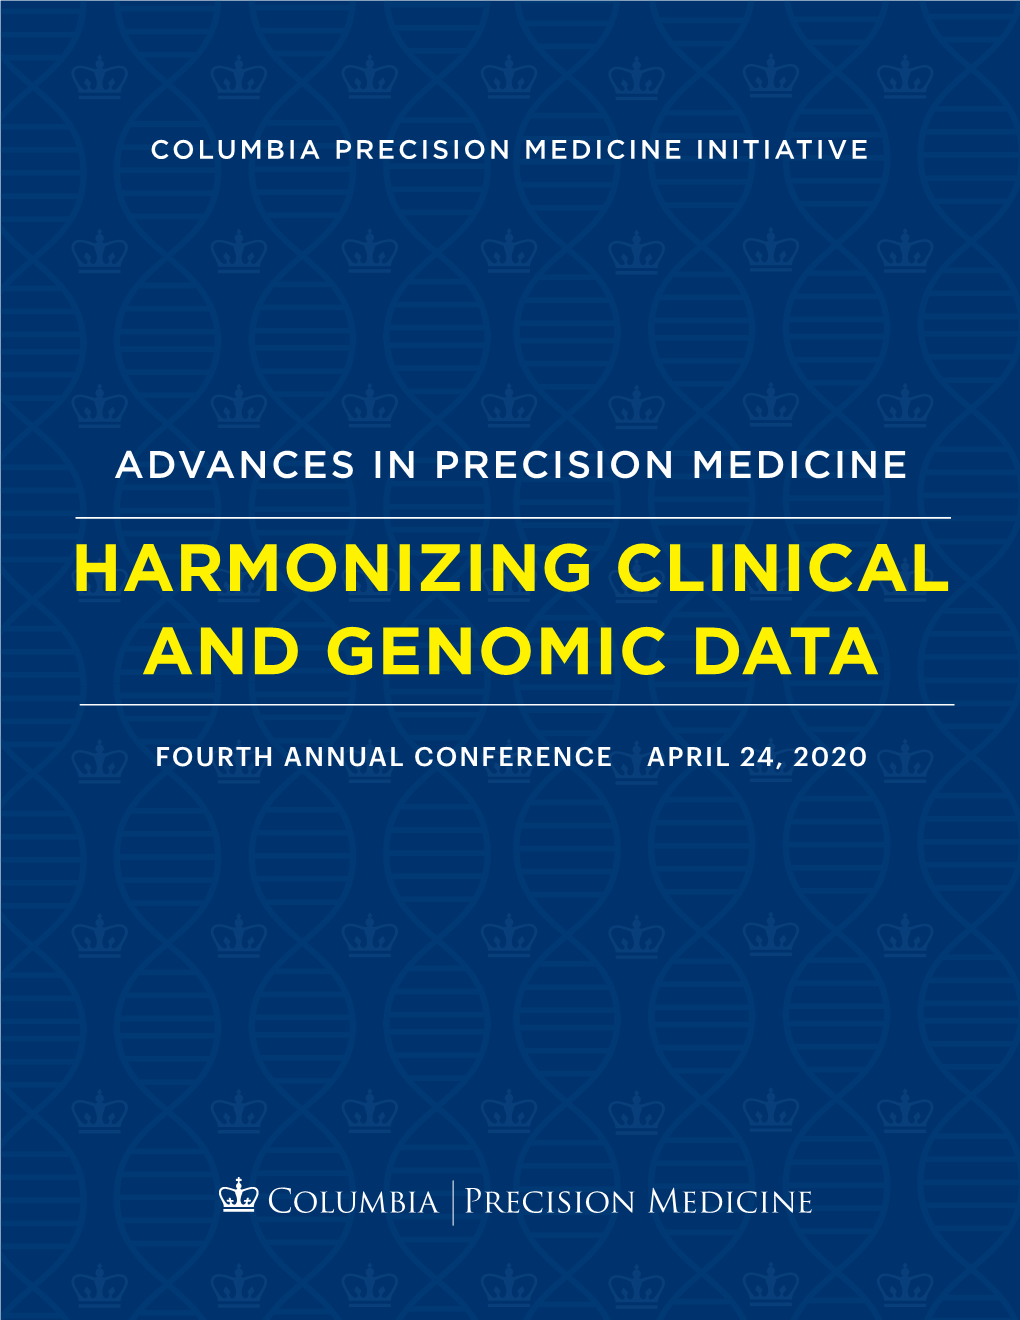 Harmonizing Clinical and Genomic Data